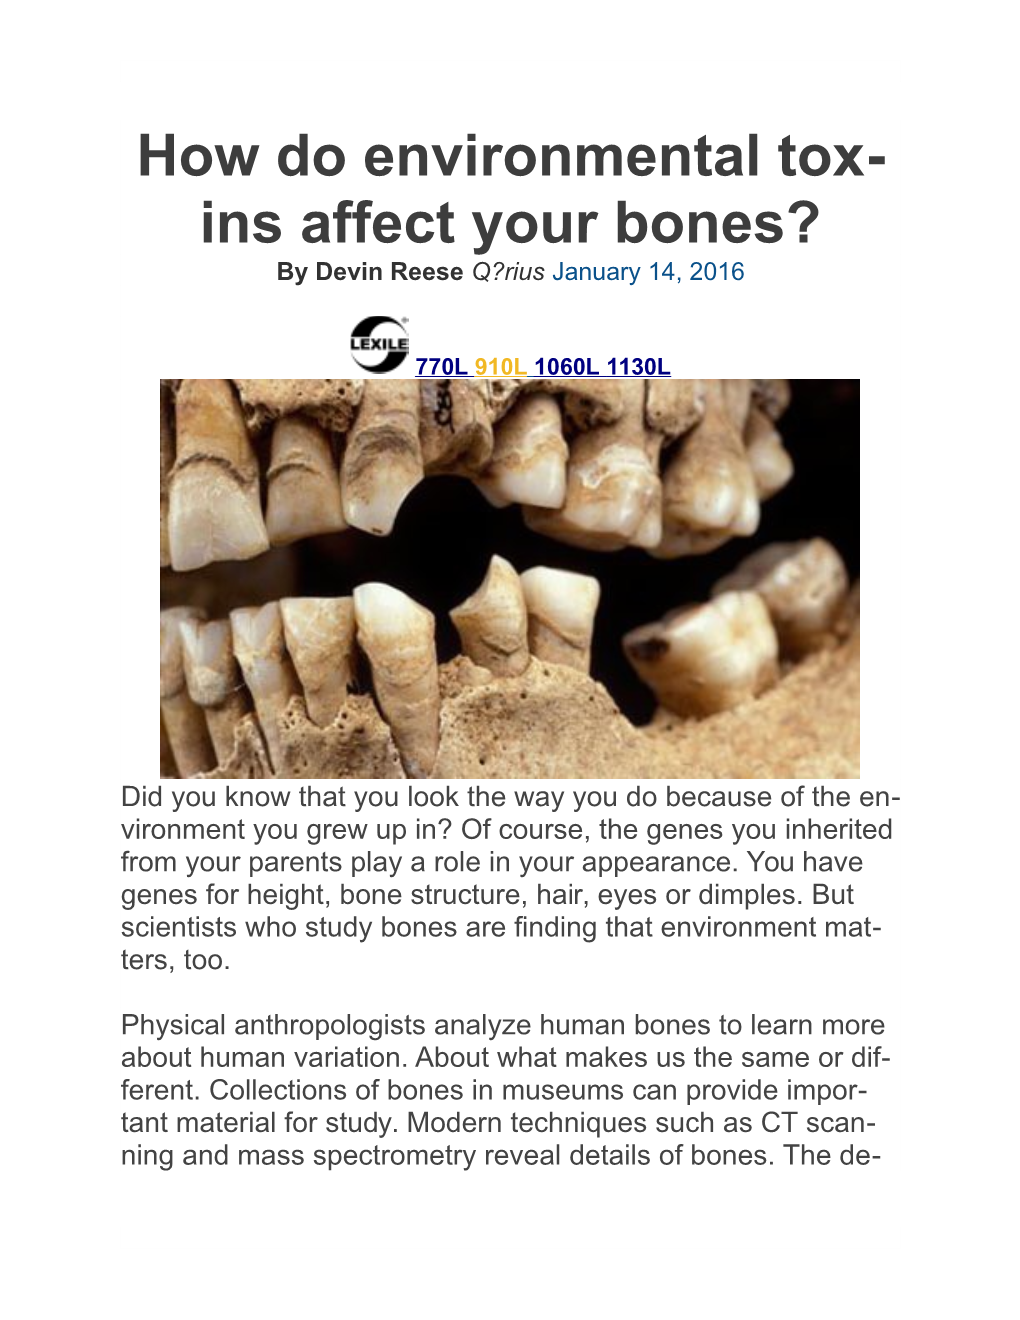 How Do Environmental Toxins Affect Your Bones?